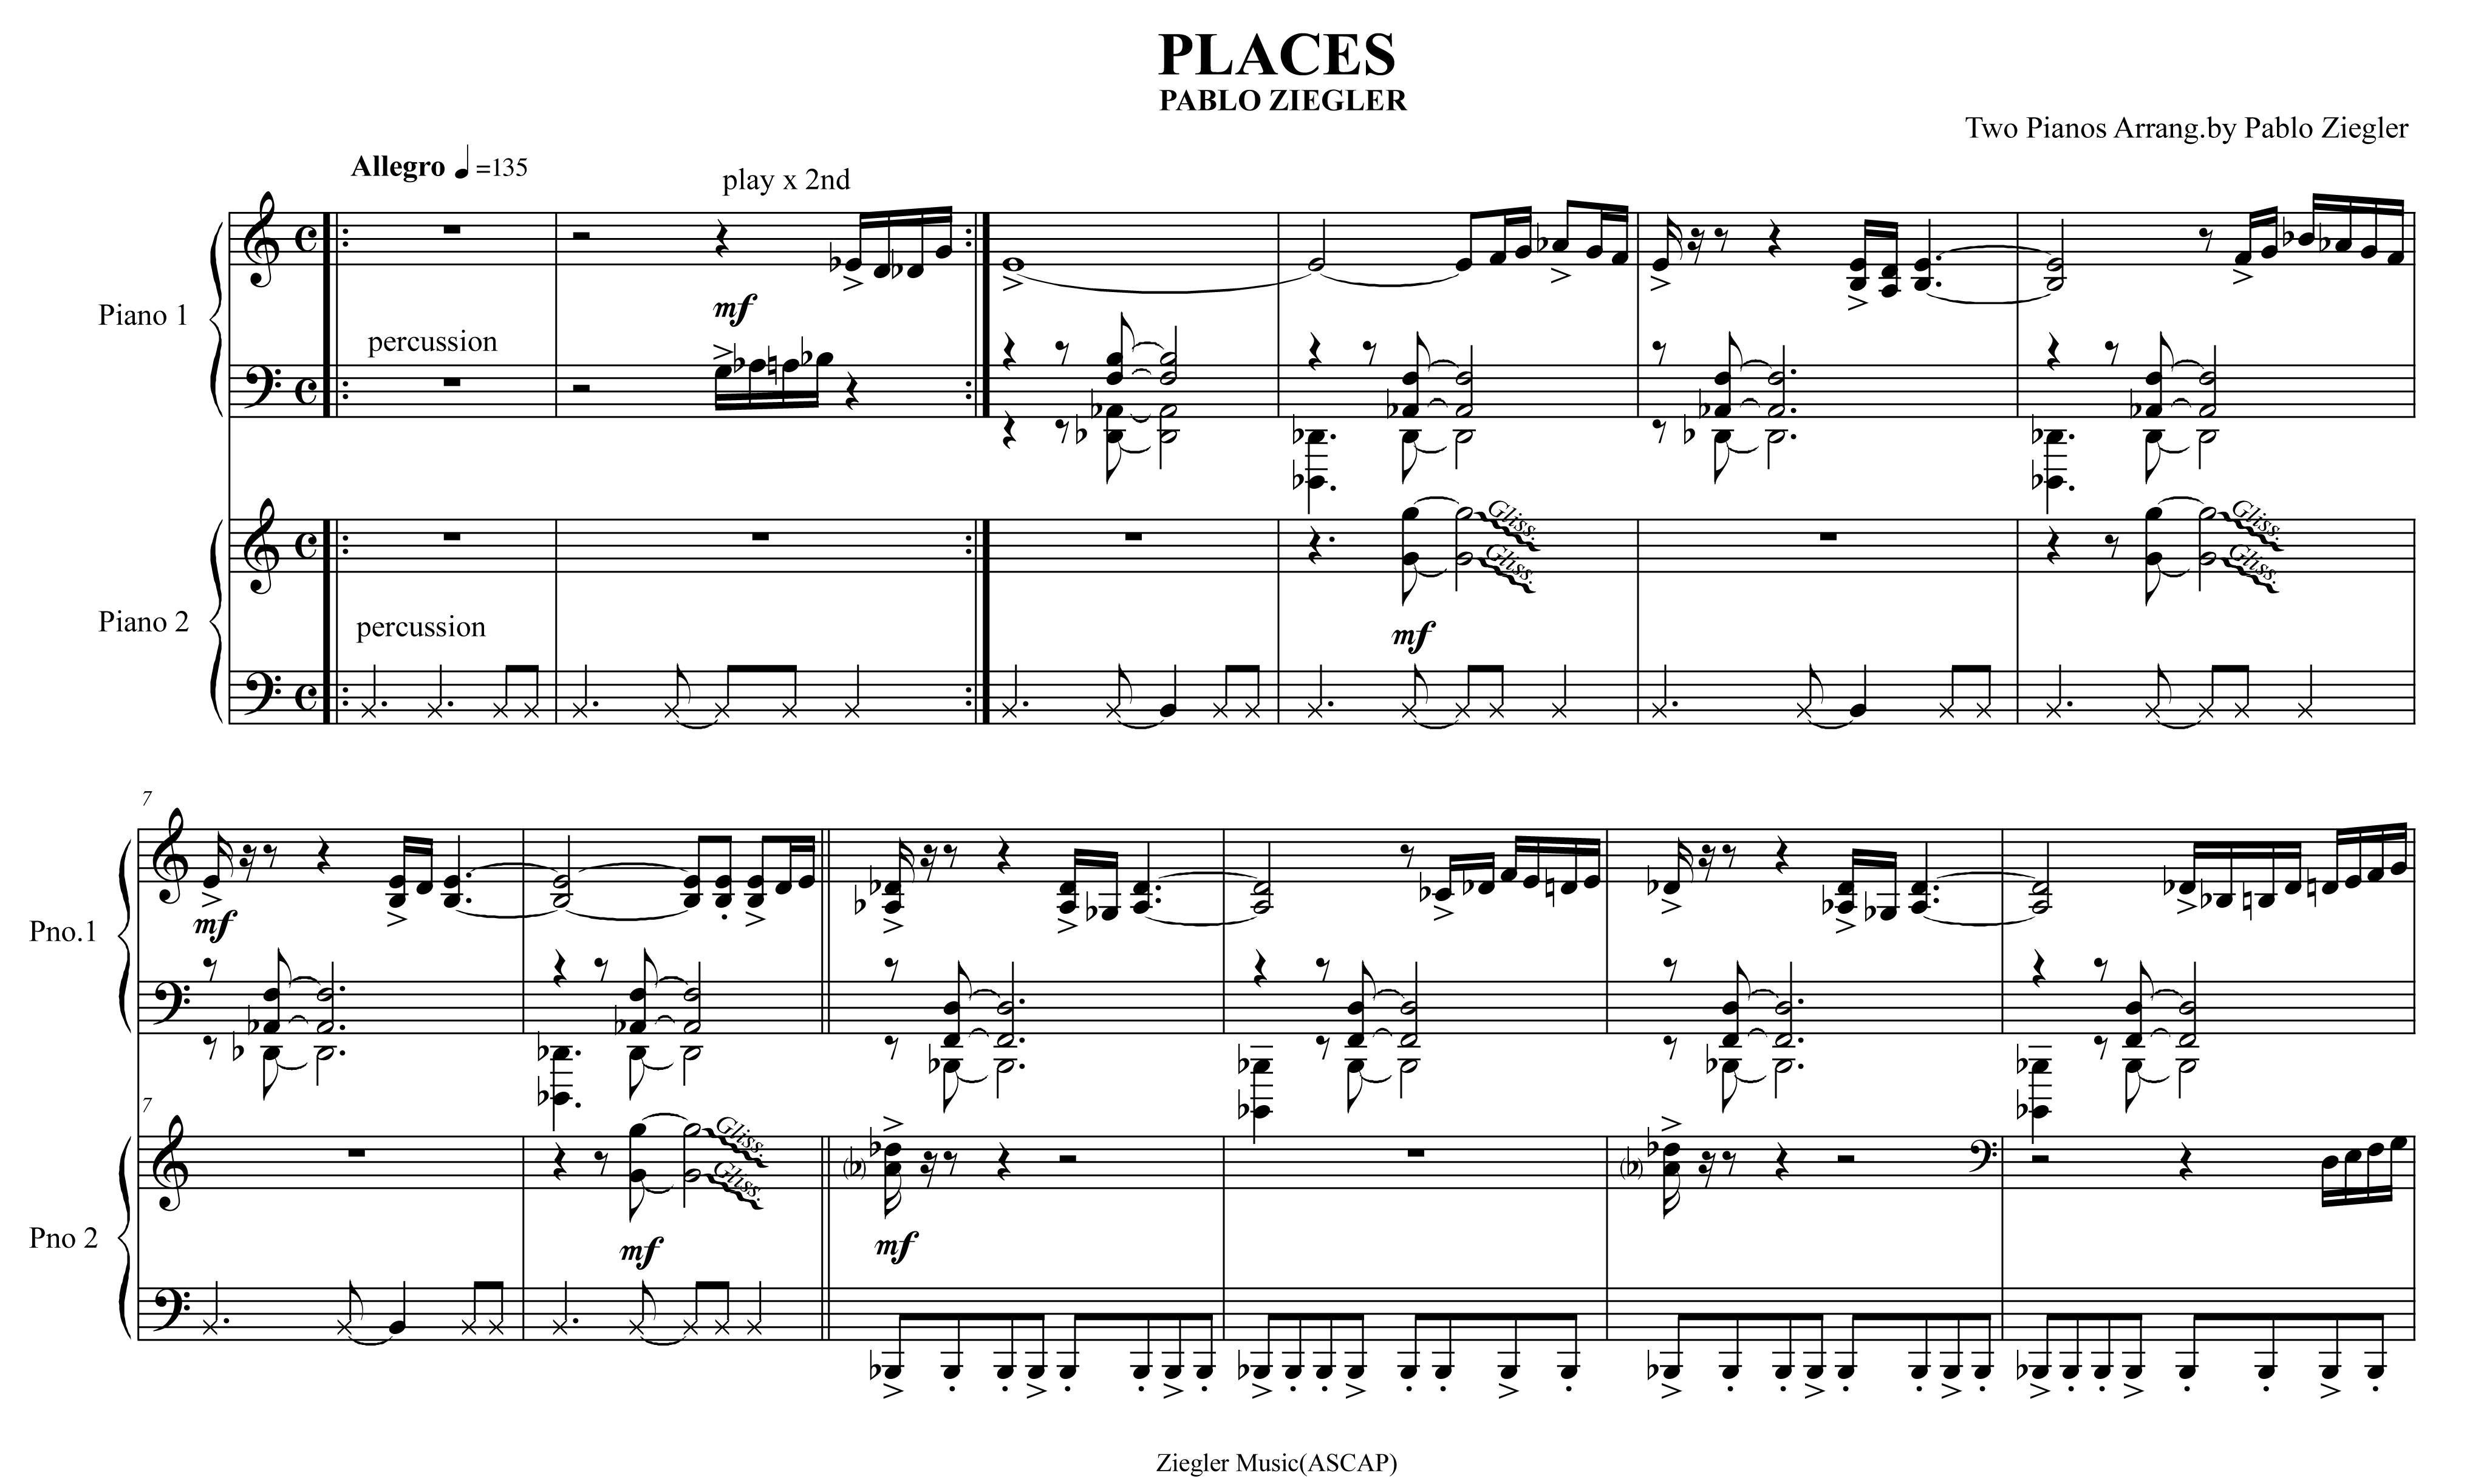 2-piano score excerpt of Ziegler's Places